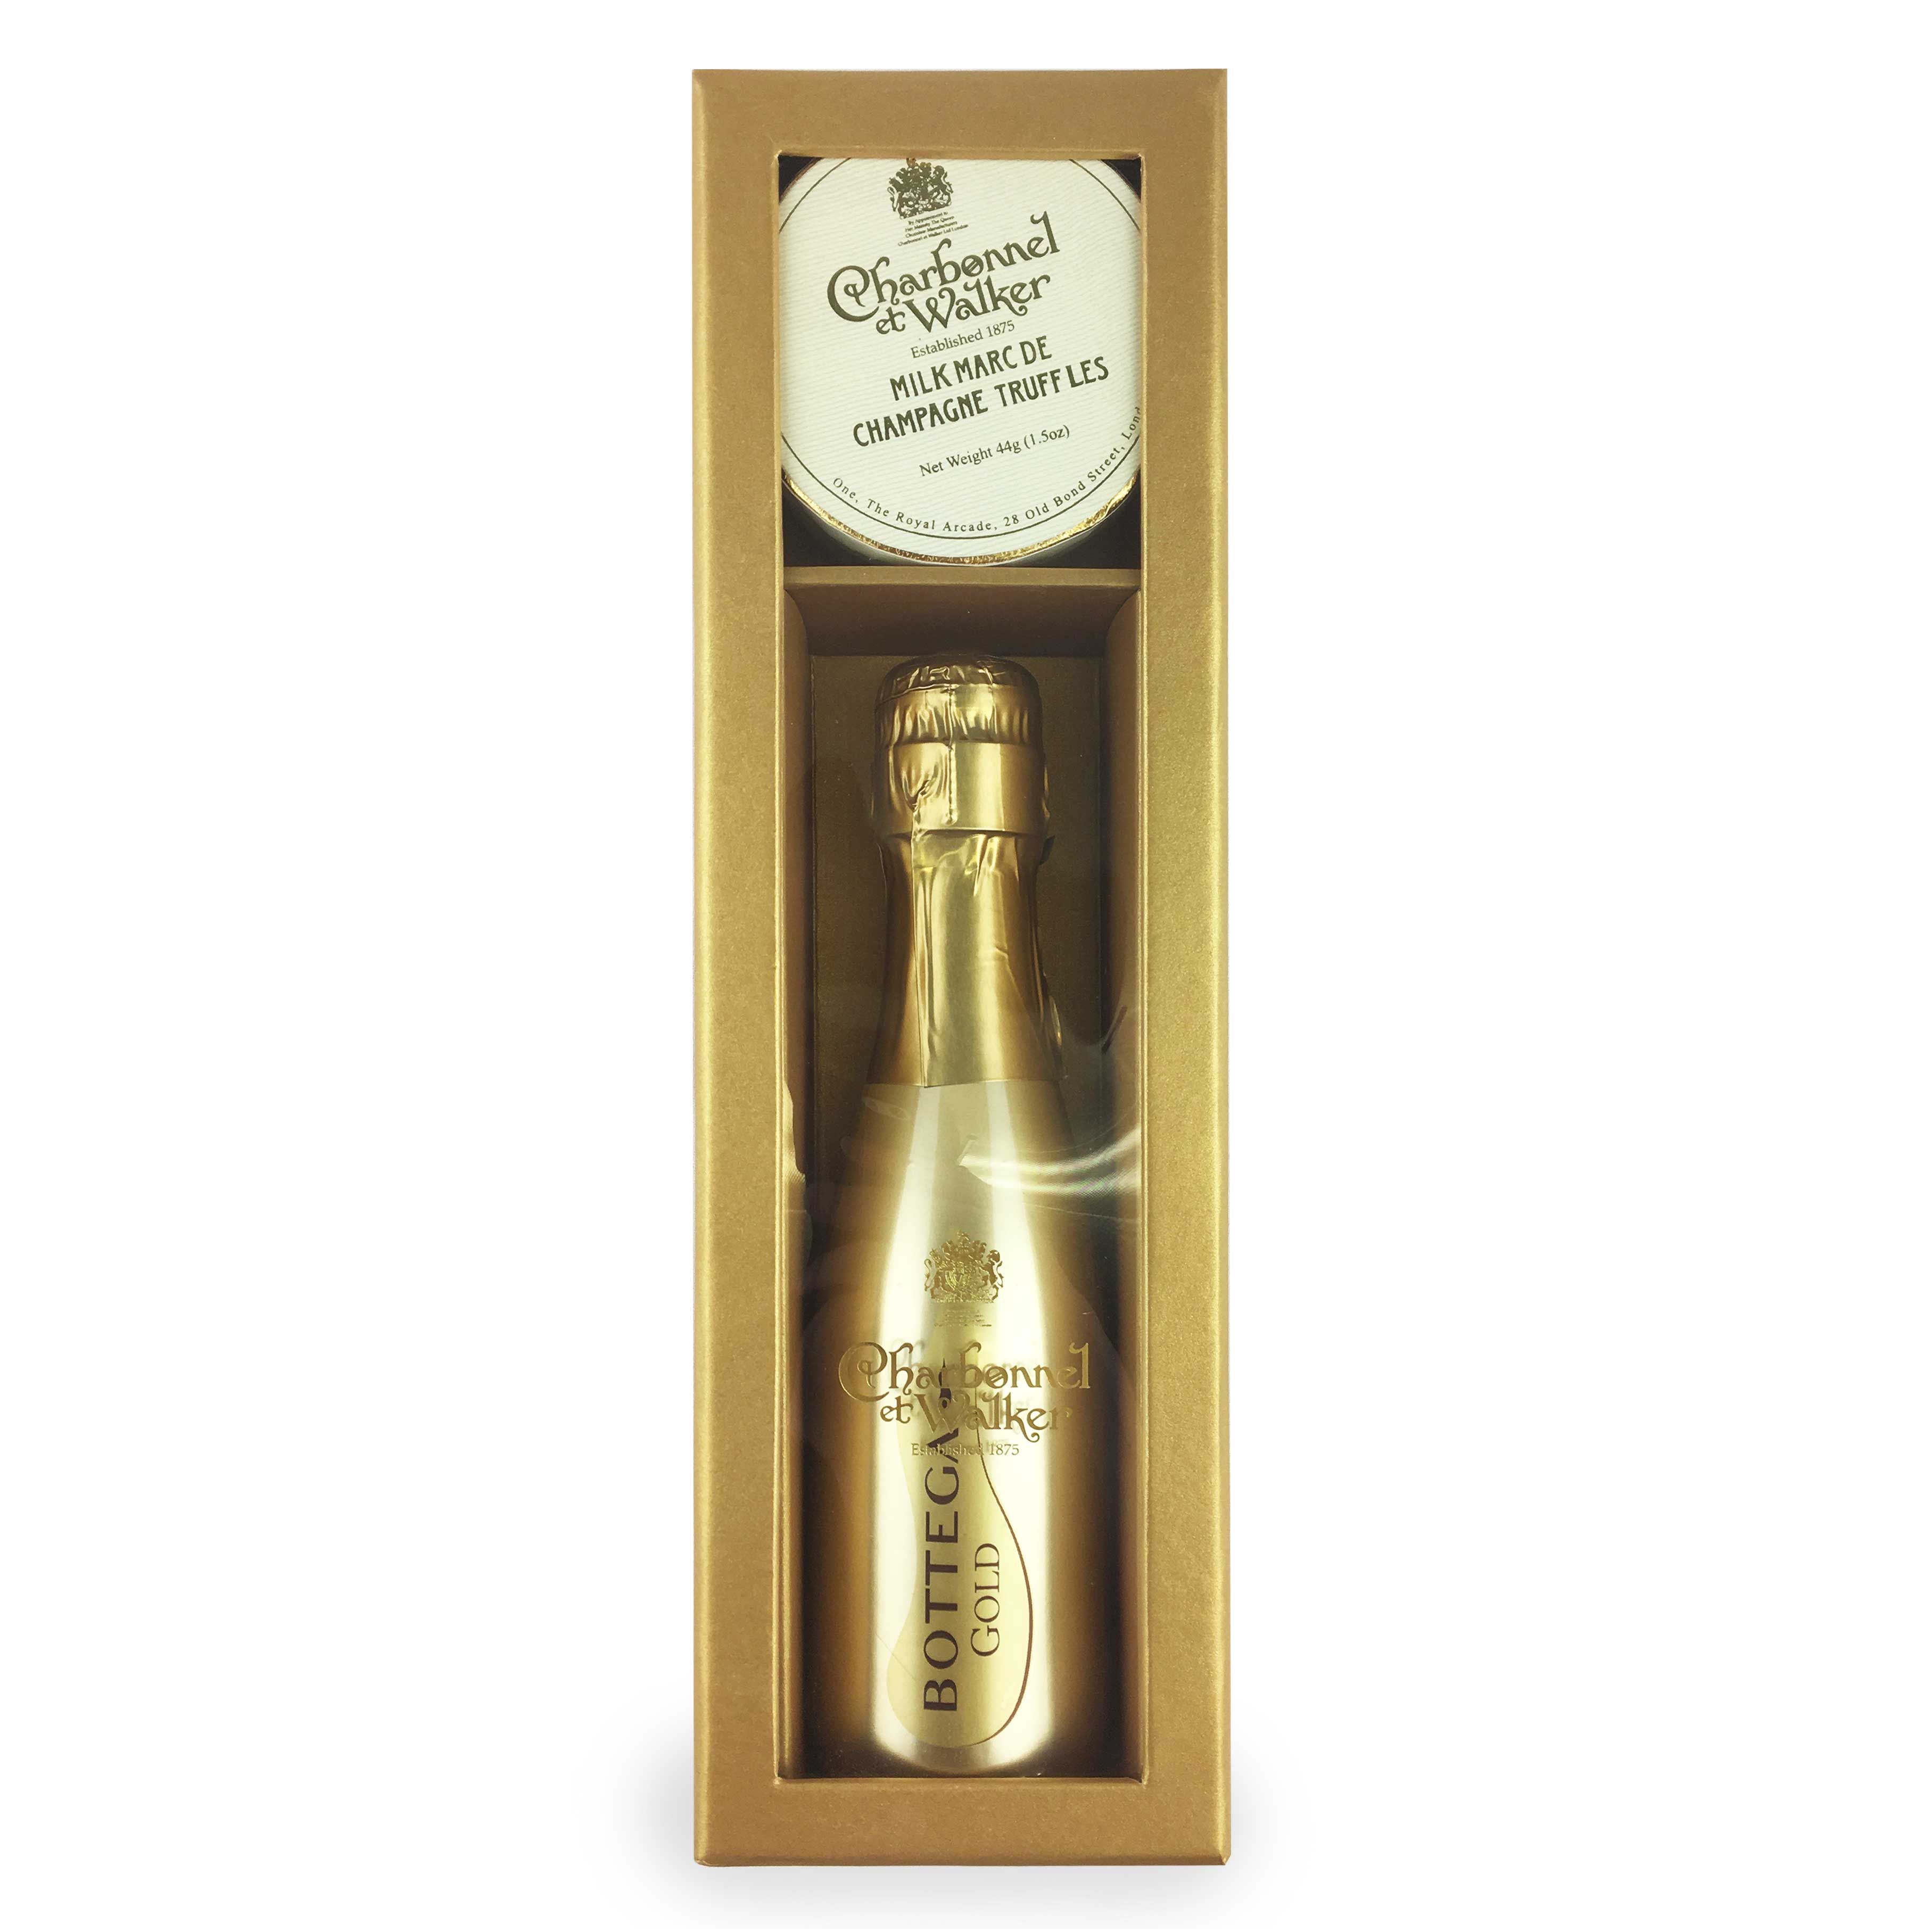 Bottega Gold Prosecco Mini And Charbonnel Truffles Gift Box Set